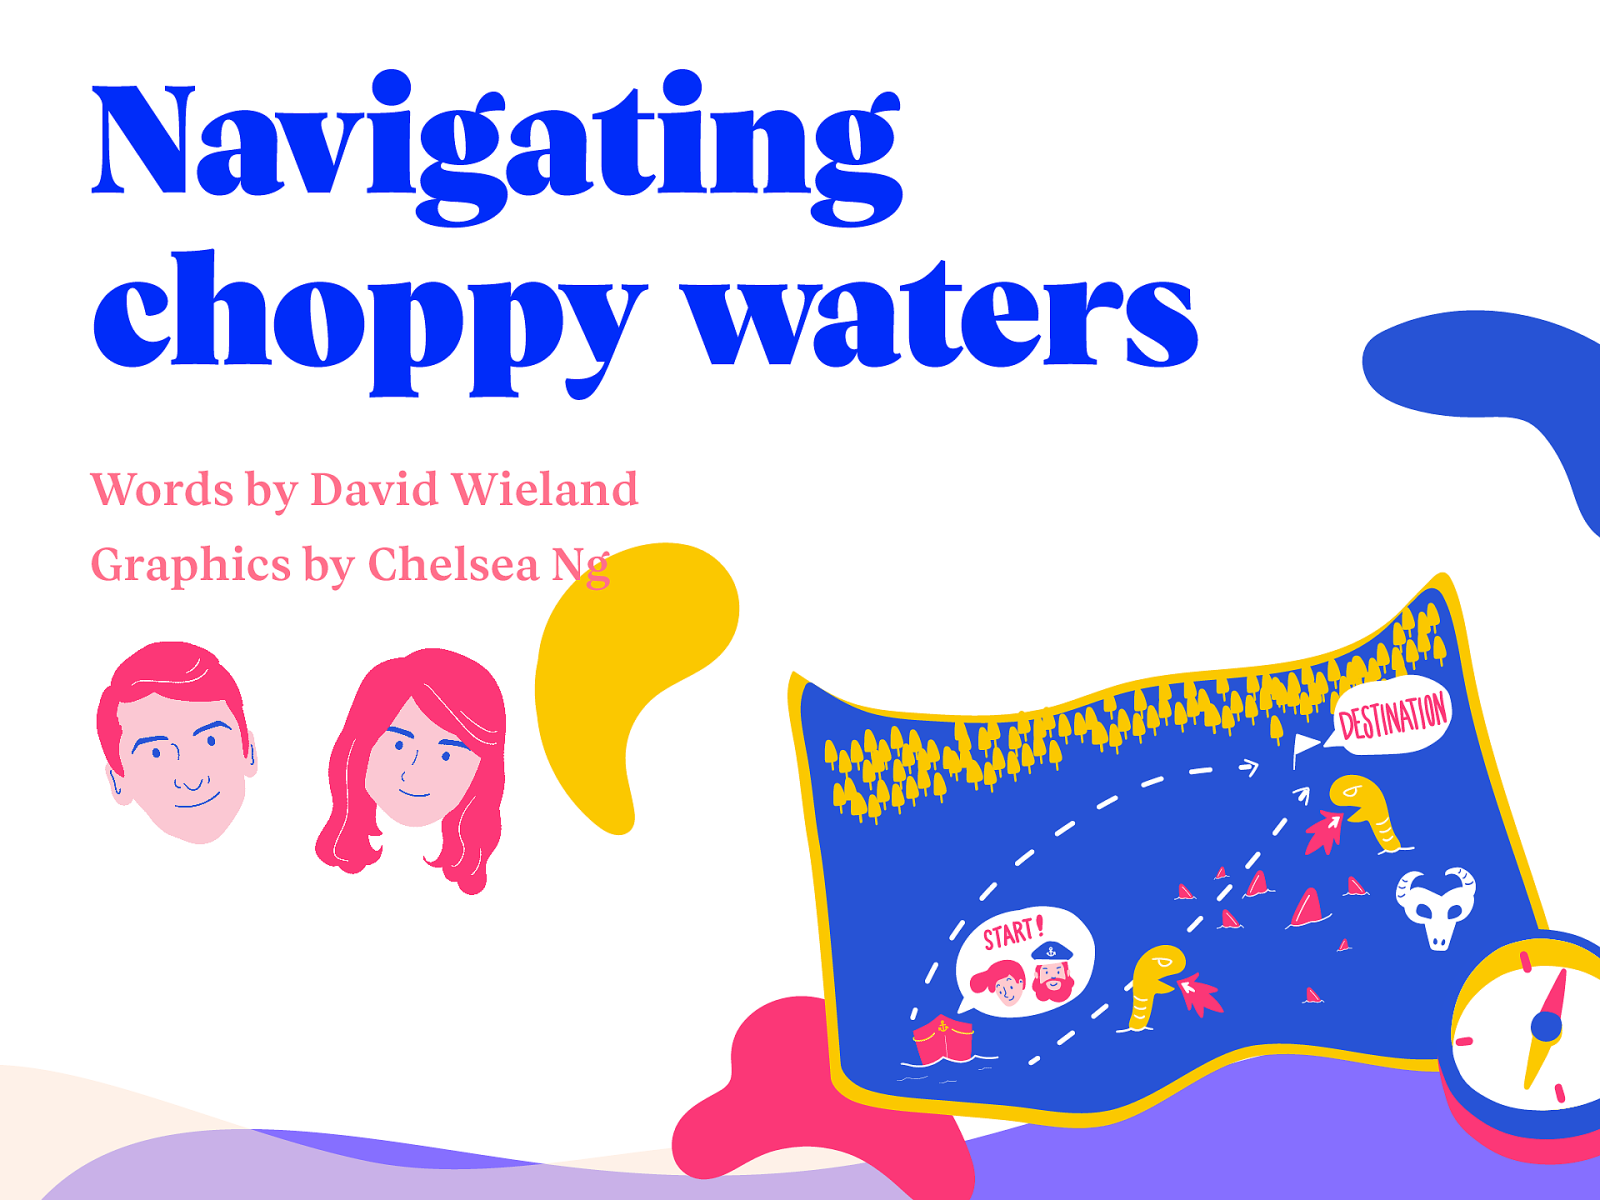 Navigating choppy waters